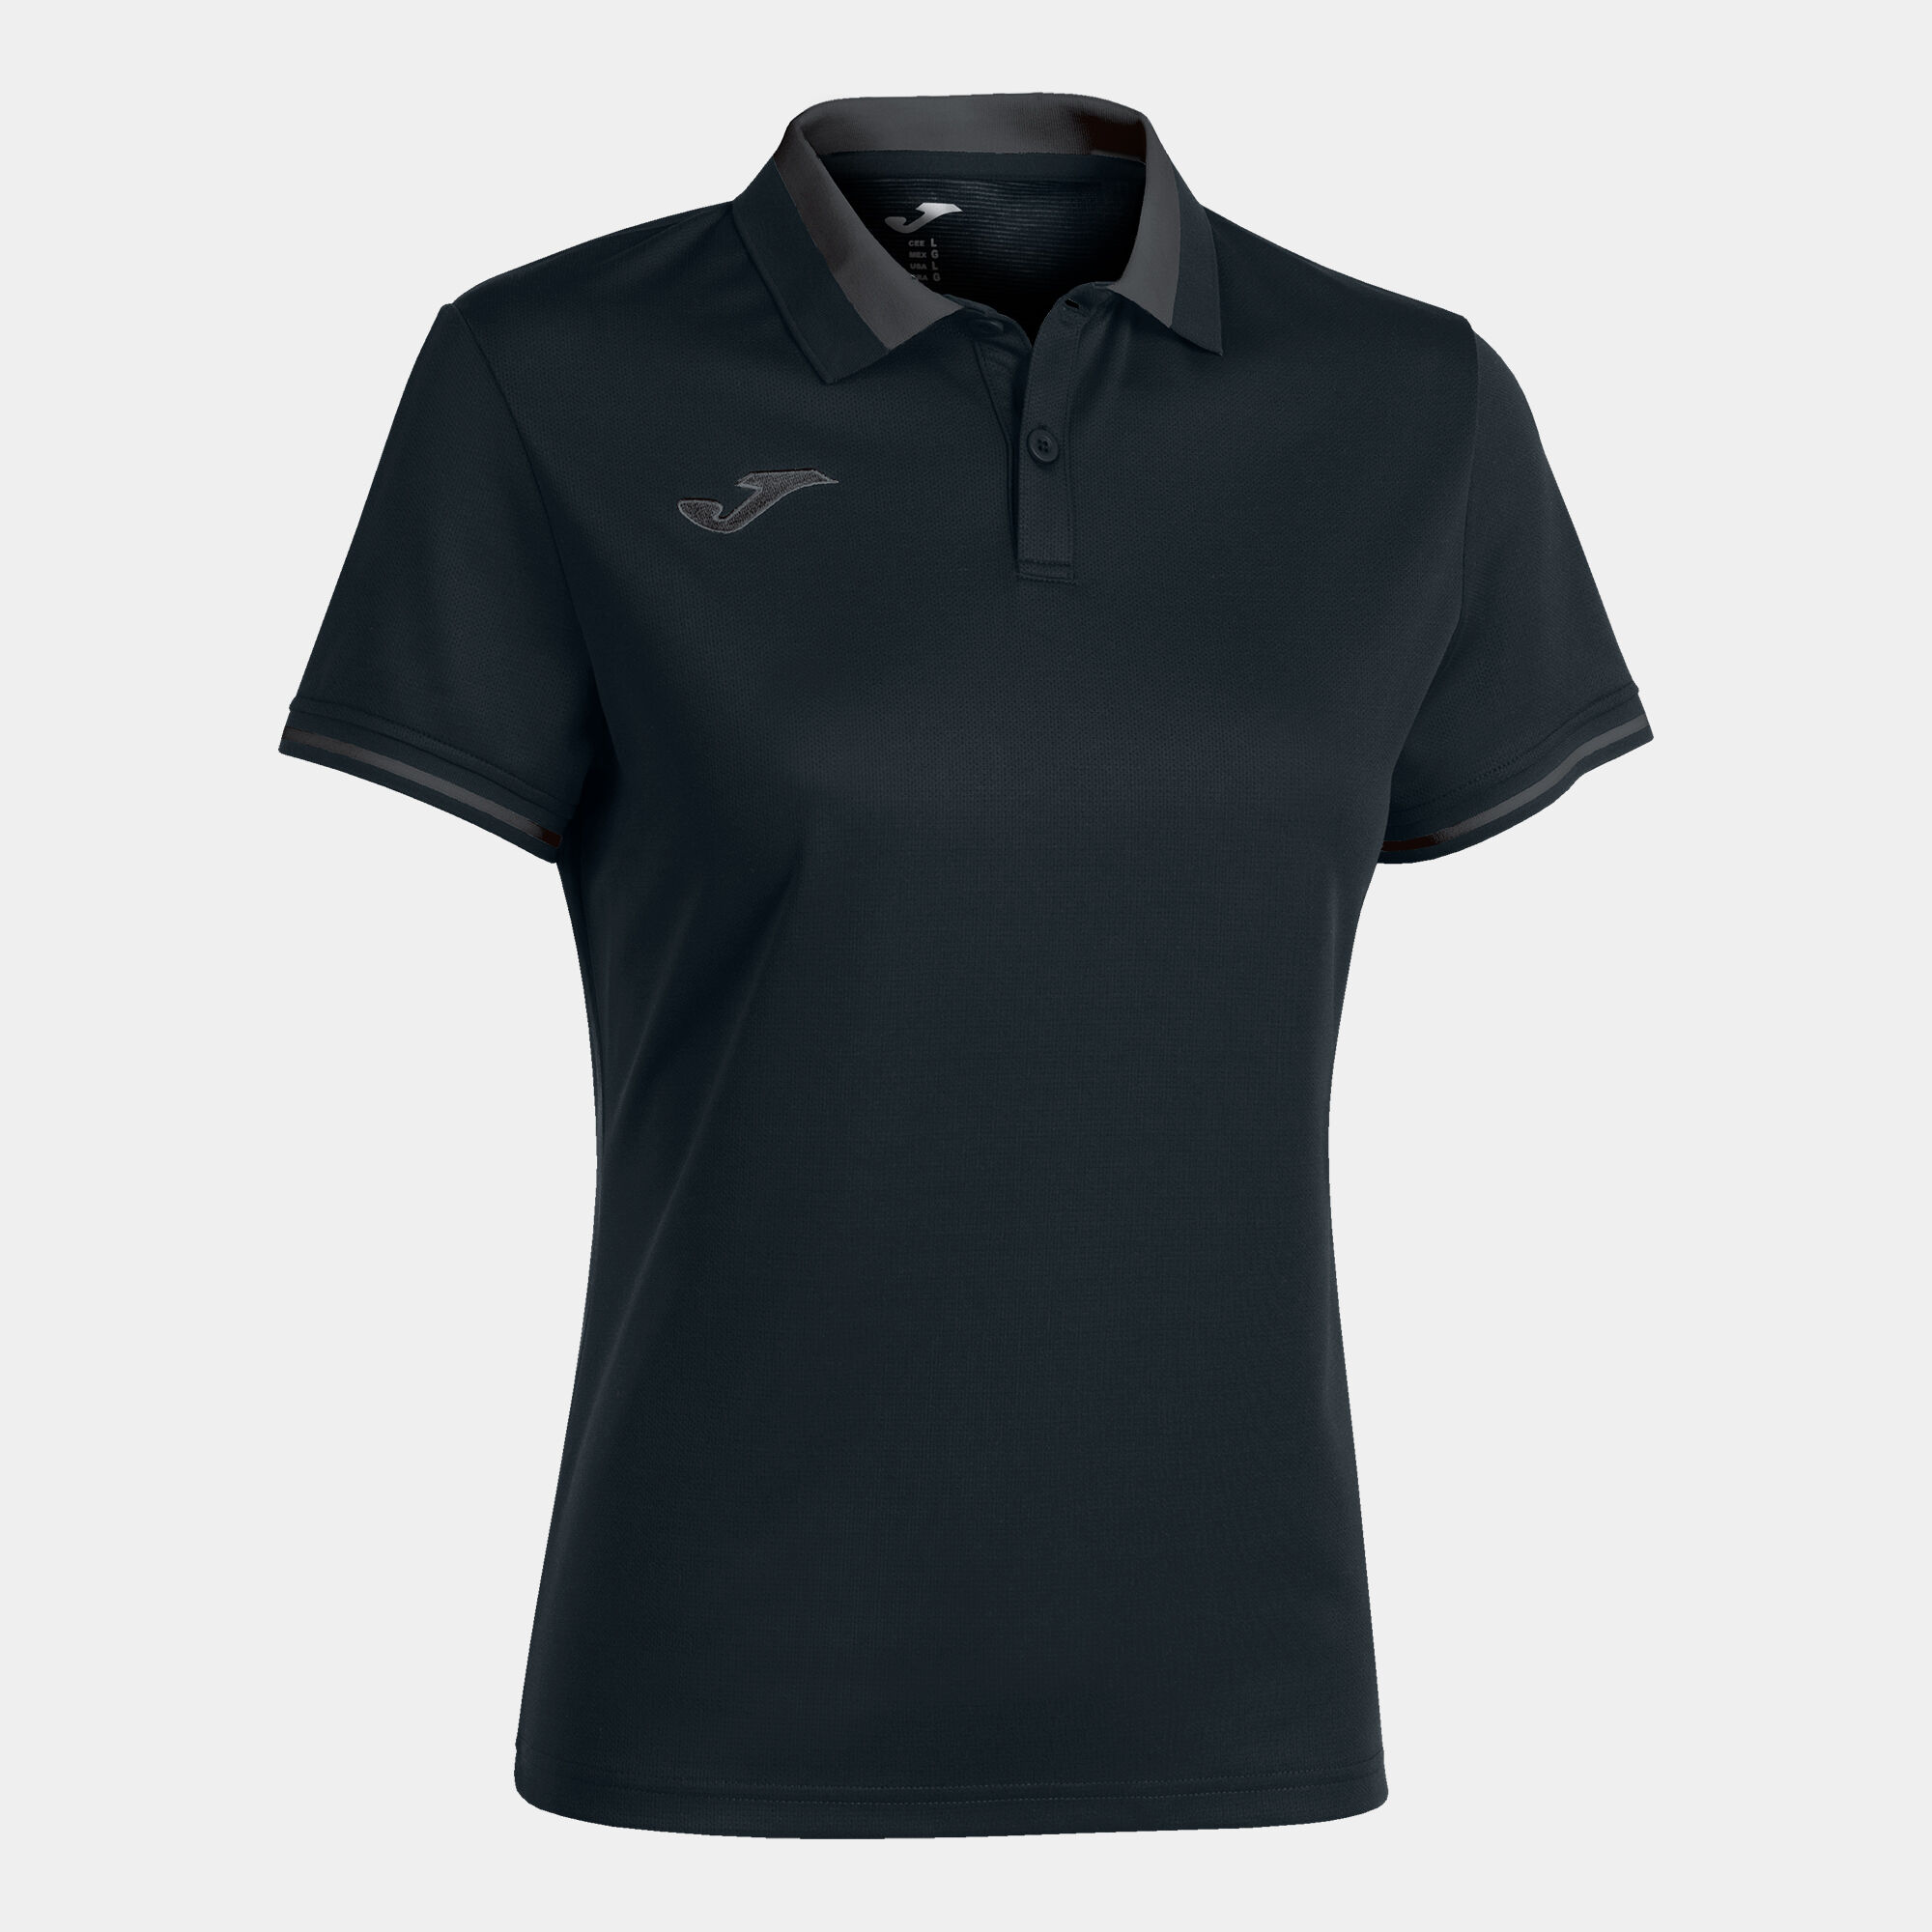 Polo shirt short-sleeve woman Championship VI black dark gray